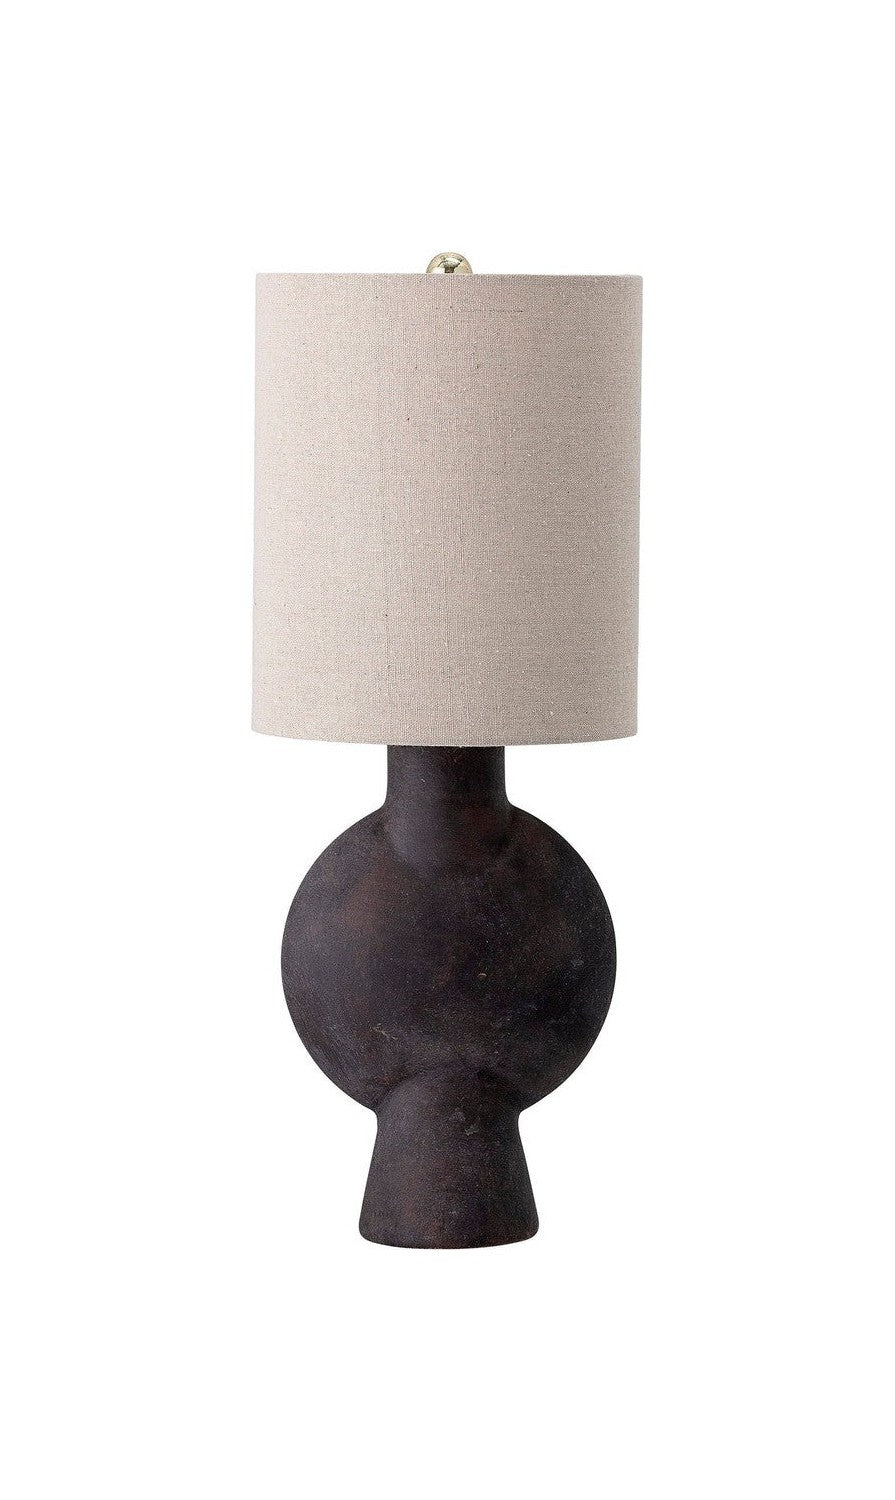 Bloomingville Sergio Table lamp, Brown, Terracotta